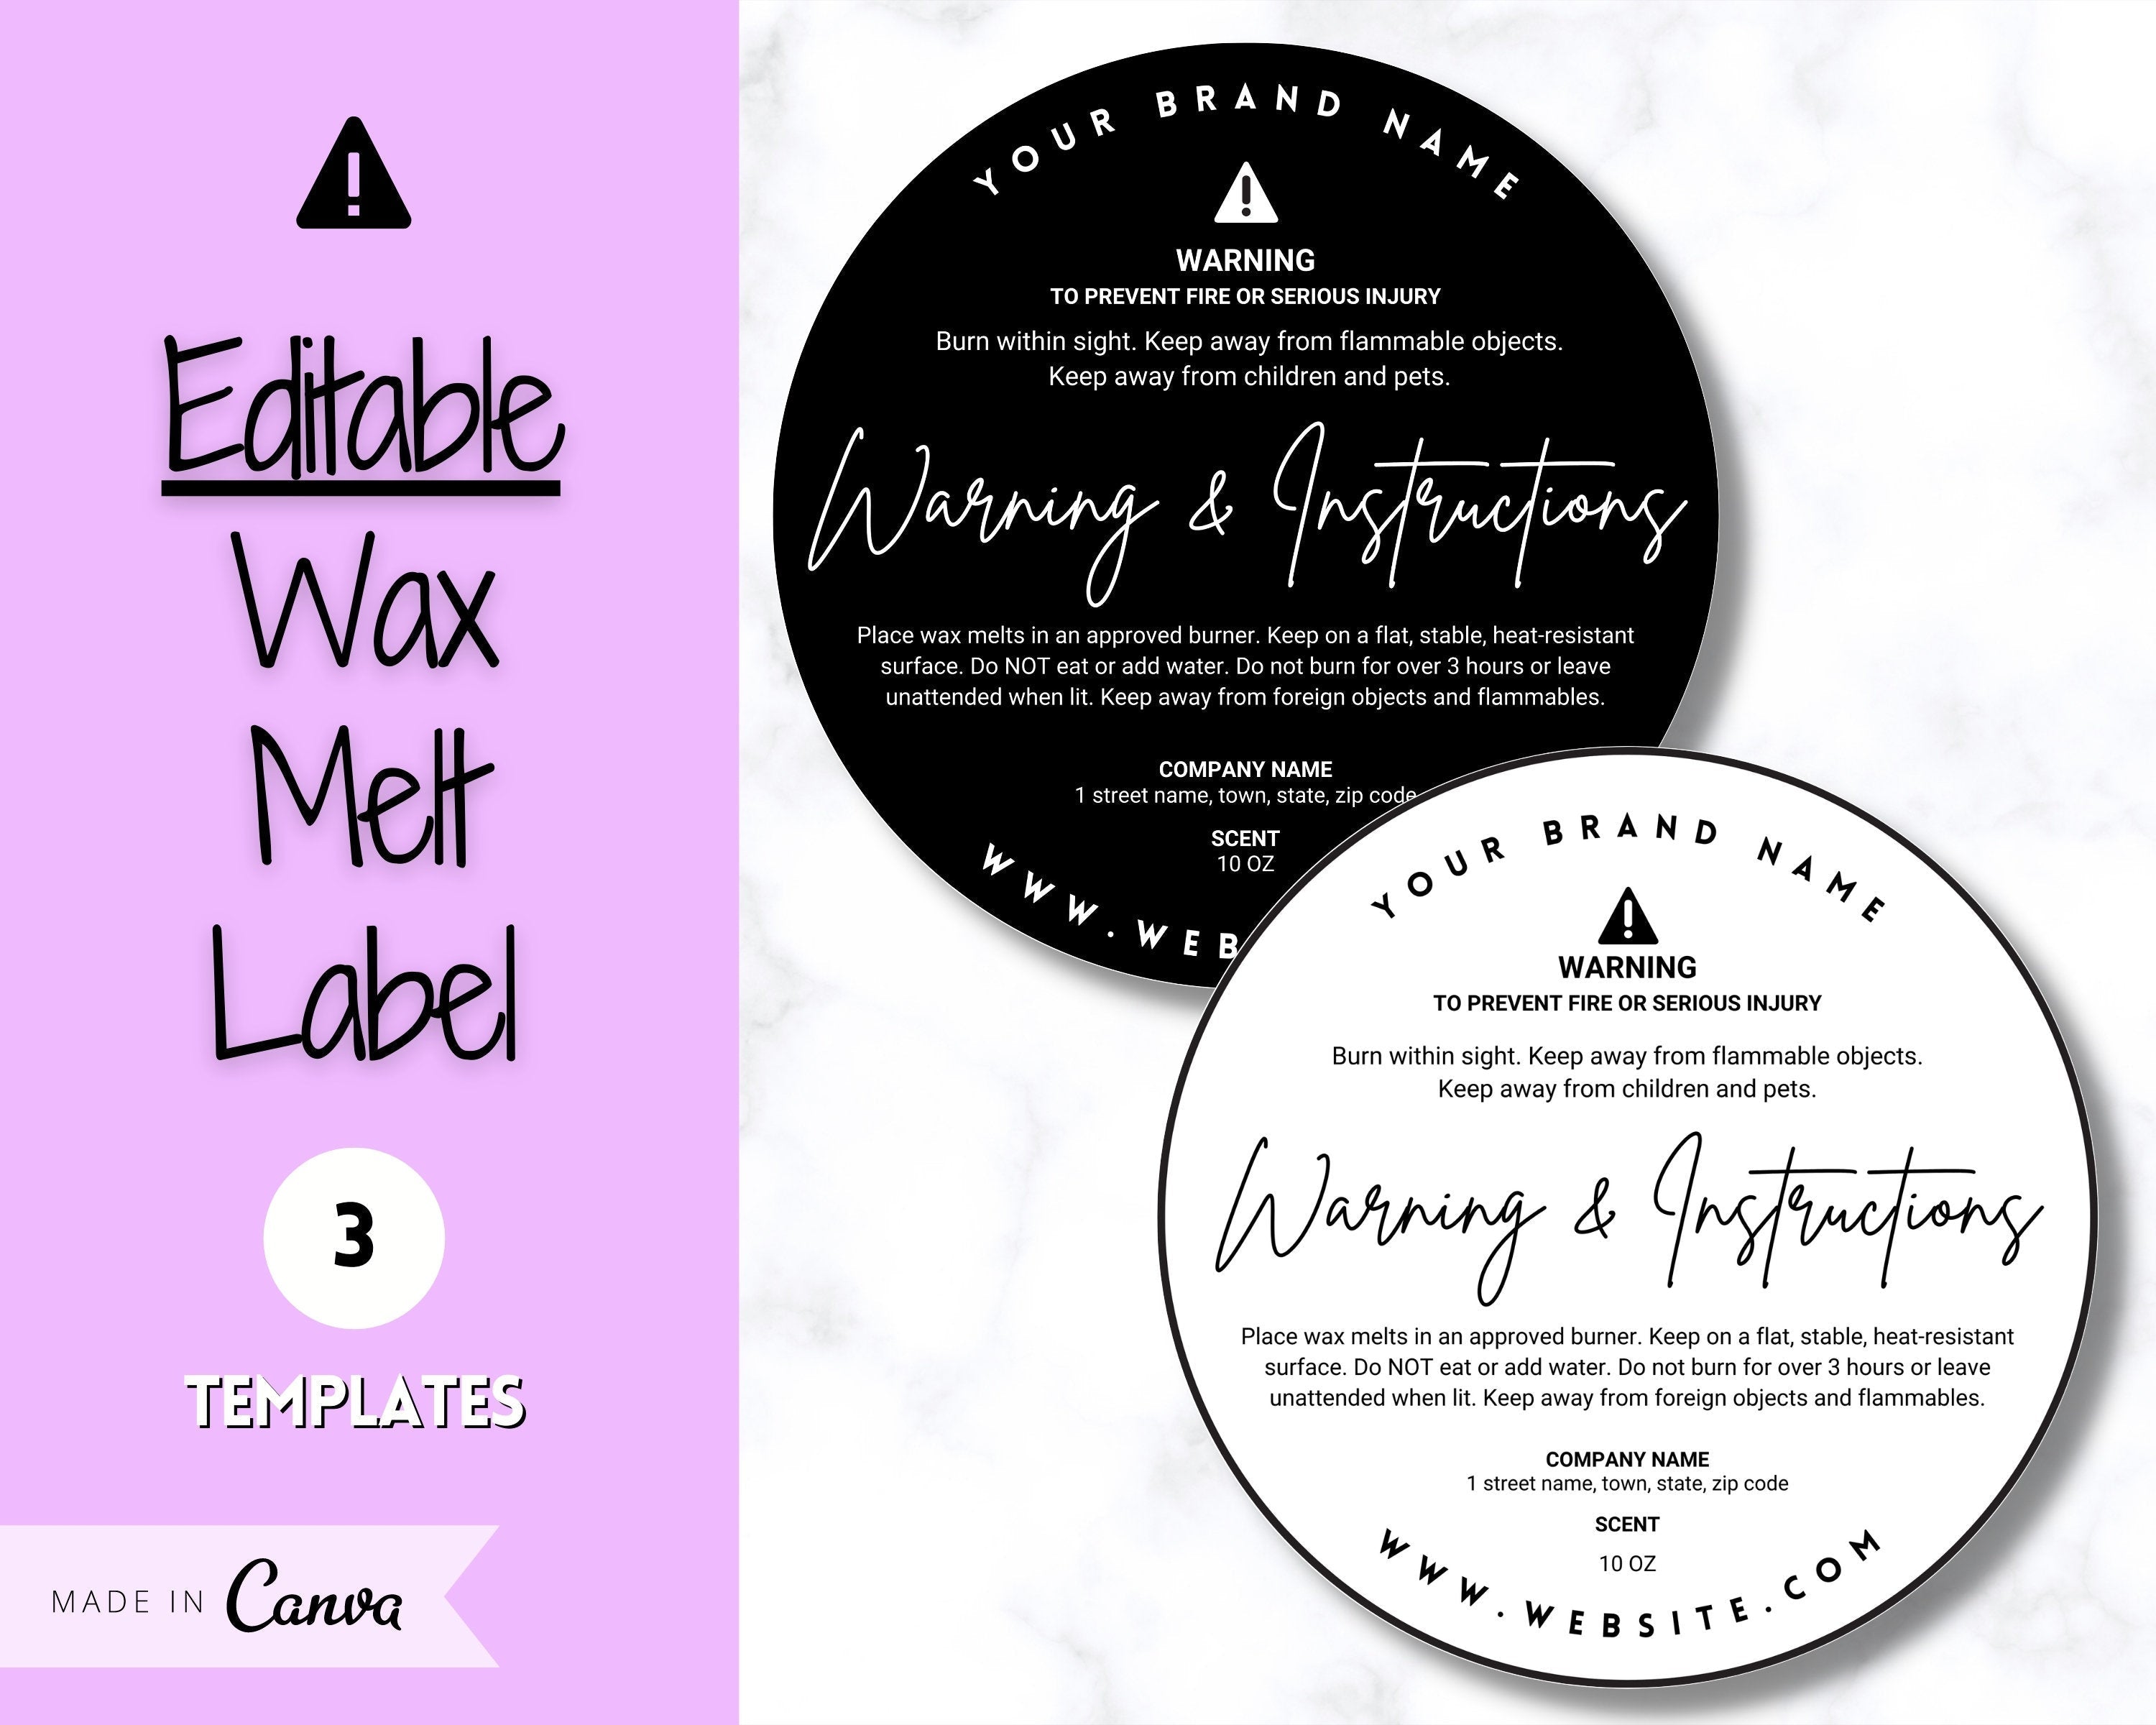 Wax Melt Warning Label Template DIGITAL DOWNLOAD Custom Editable